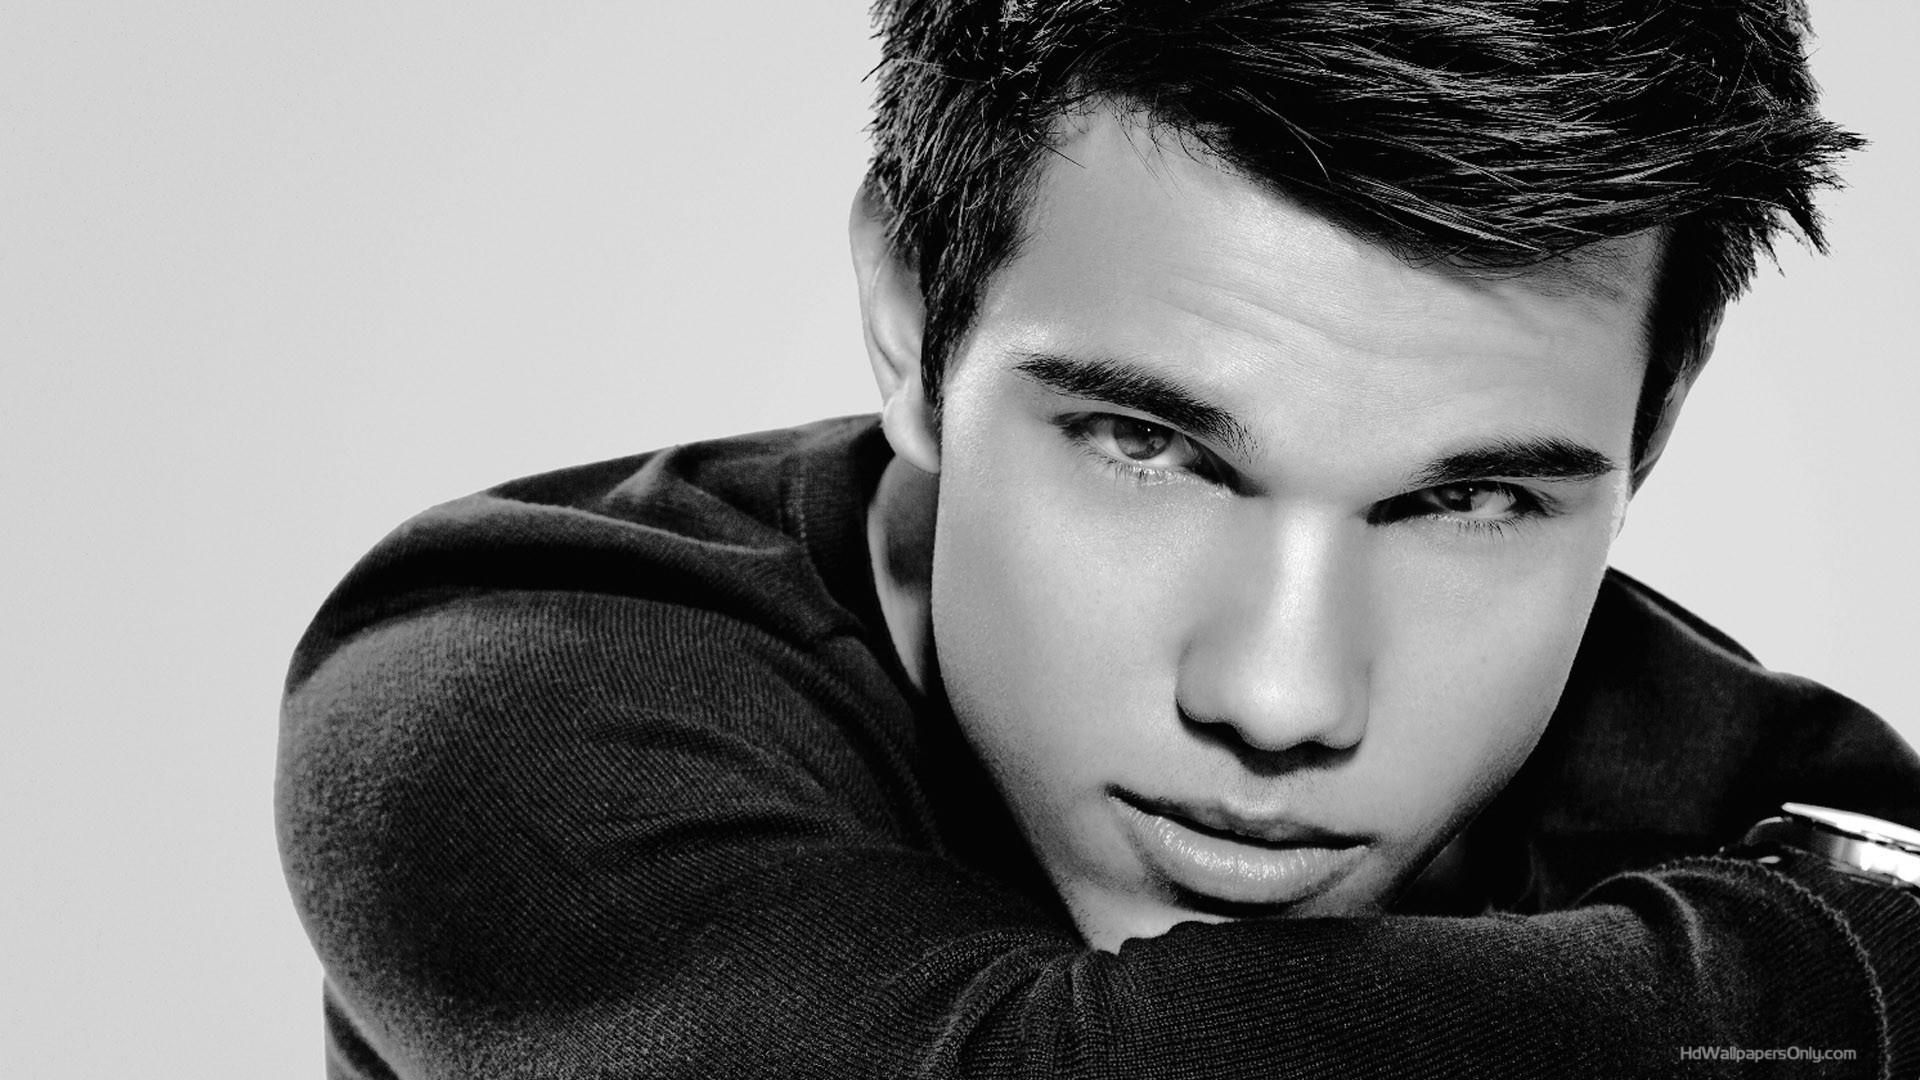 Taylor Lautner 2014 Photoshoot 1920x1080